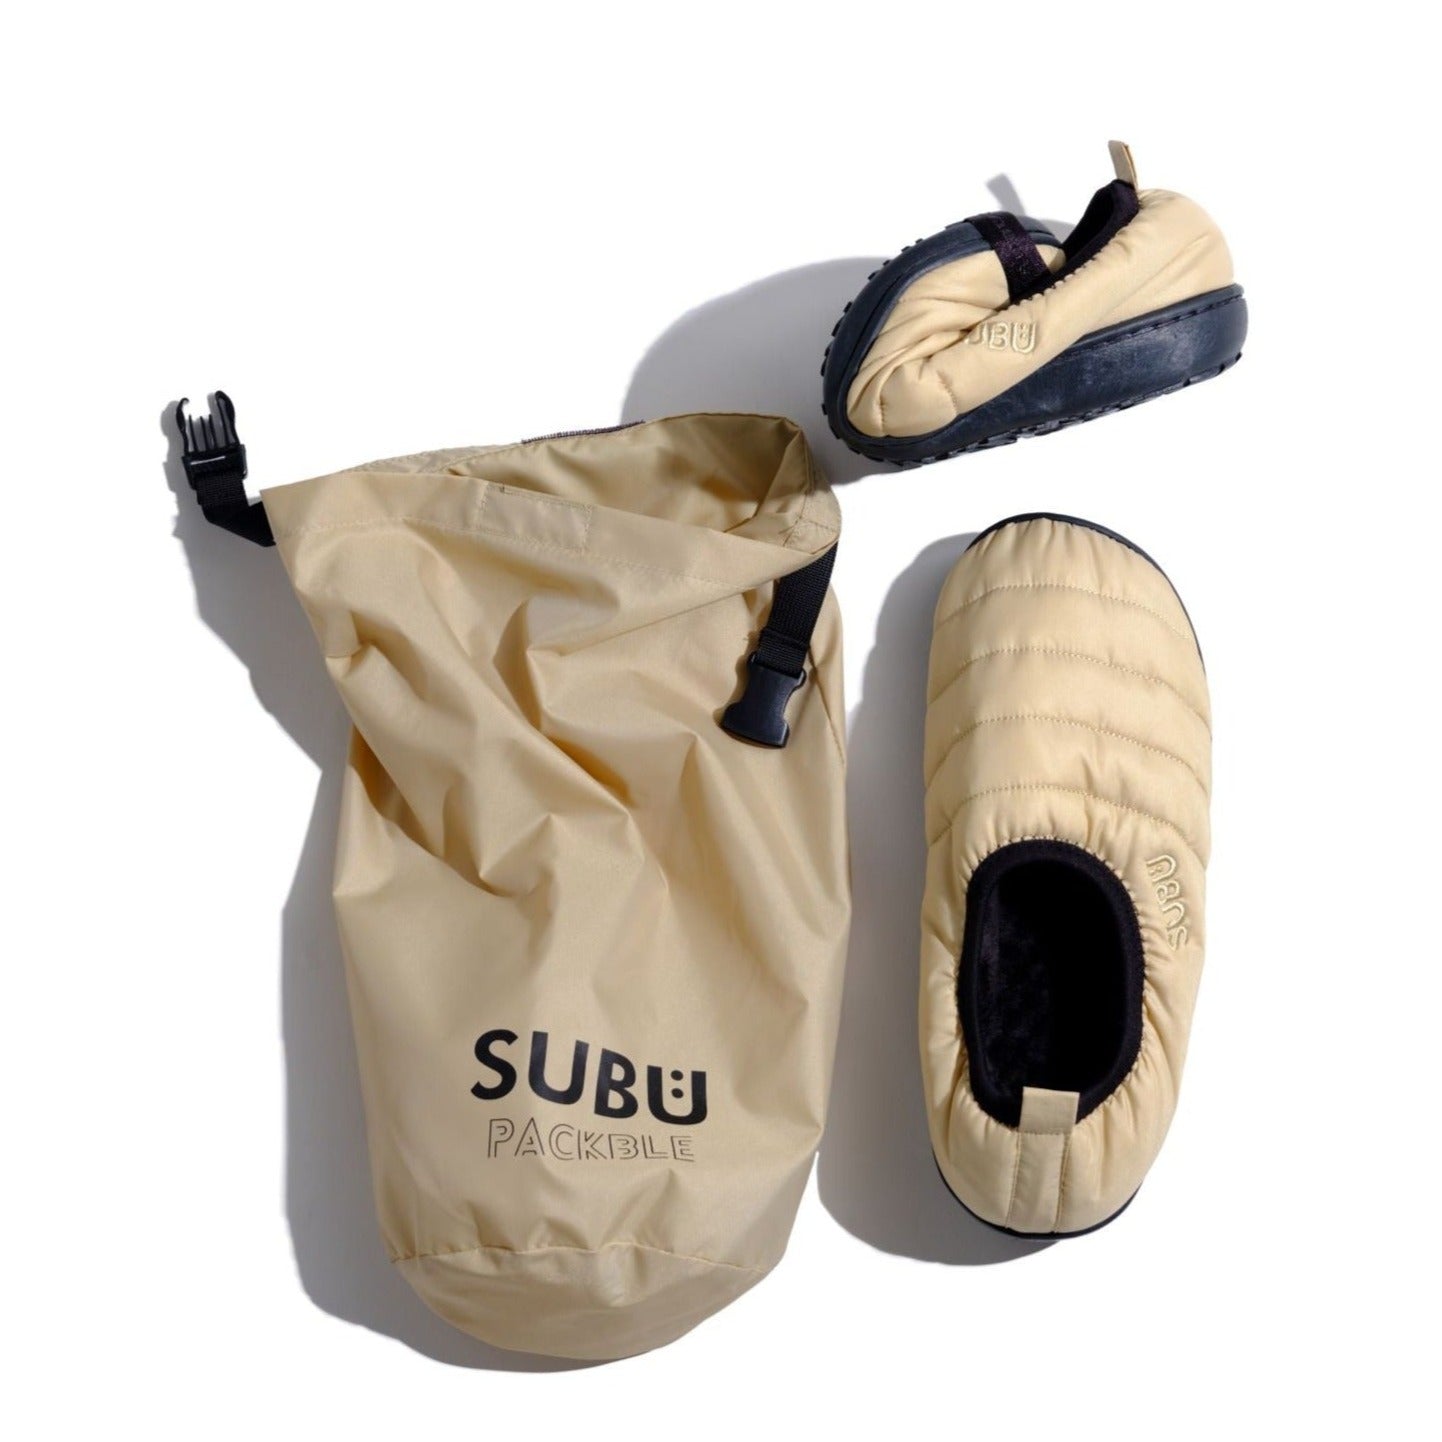 SUBU - Sandales d'hiver - Emballables